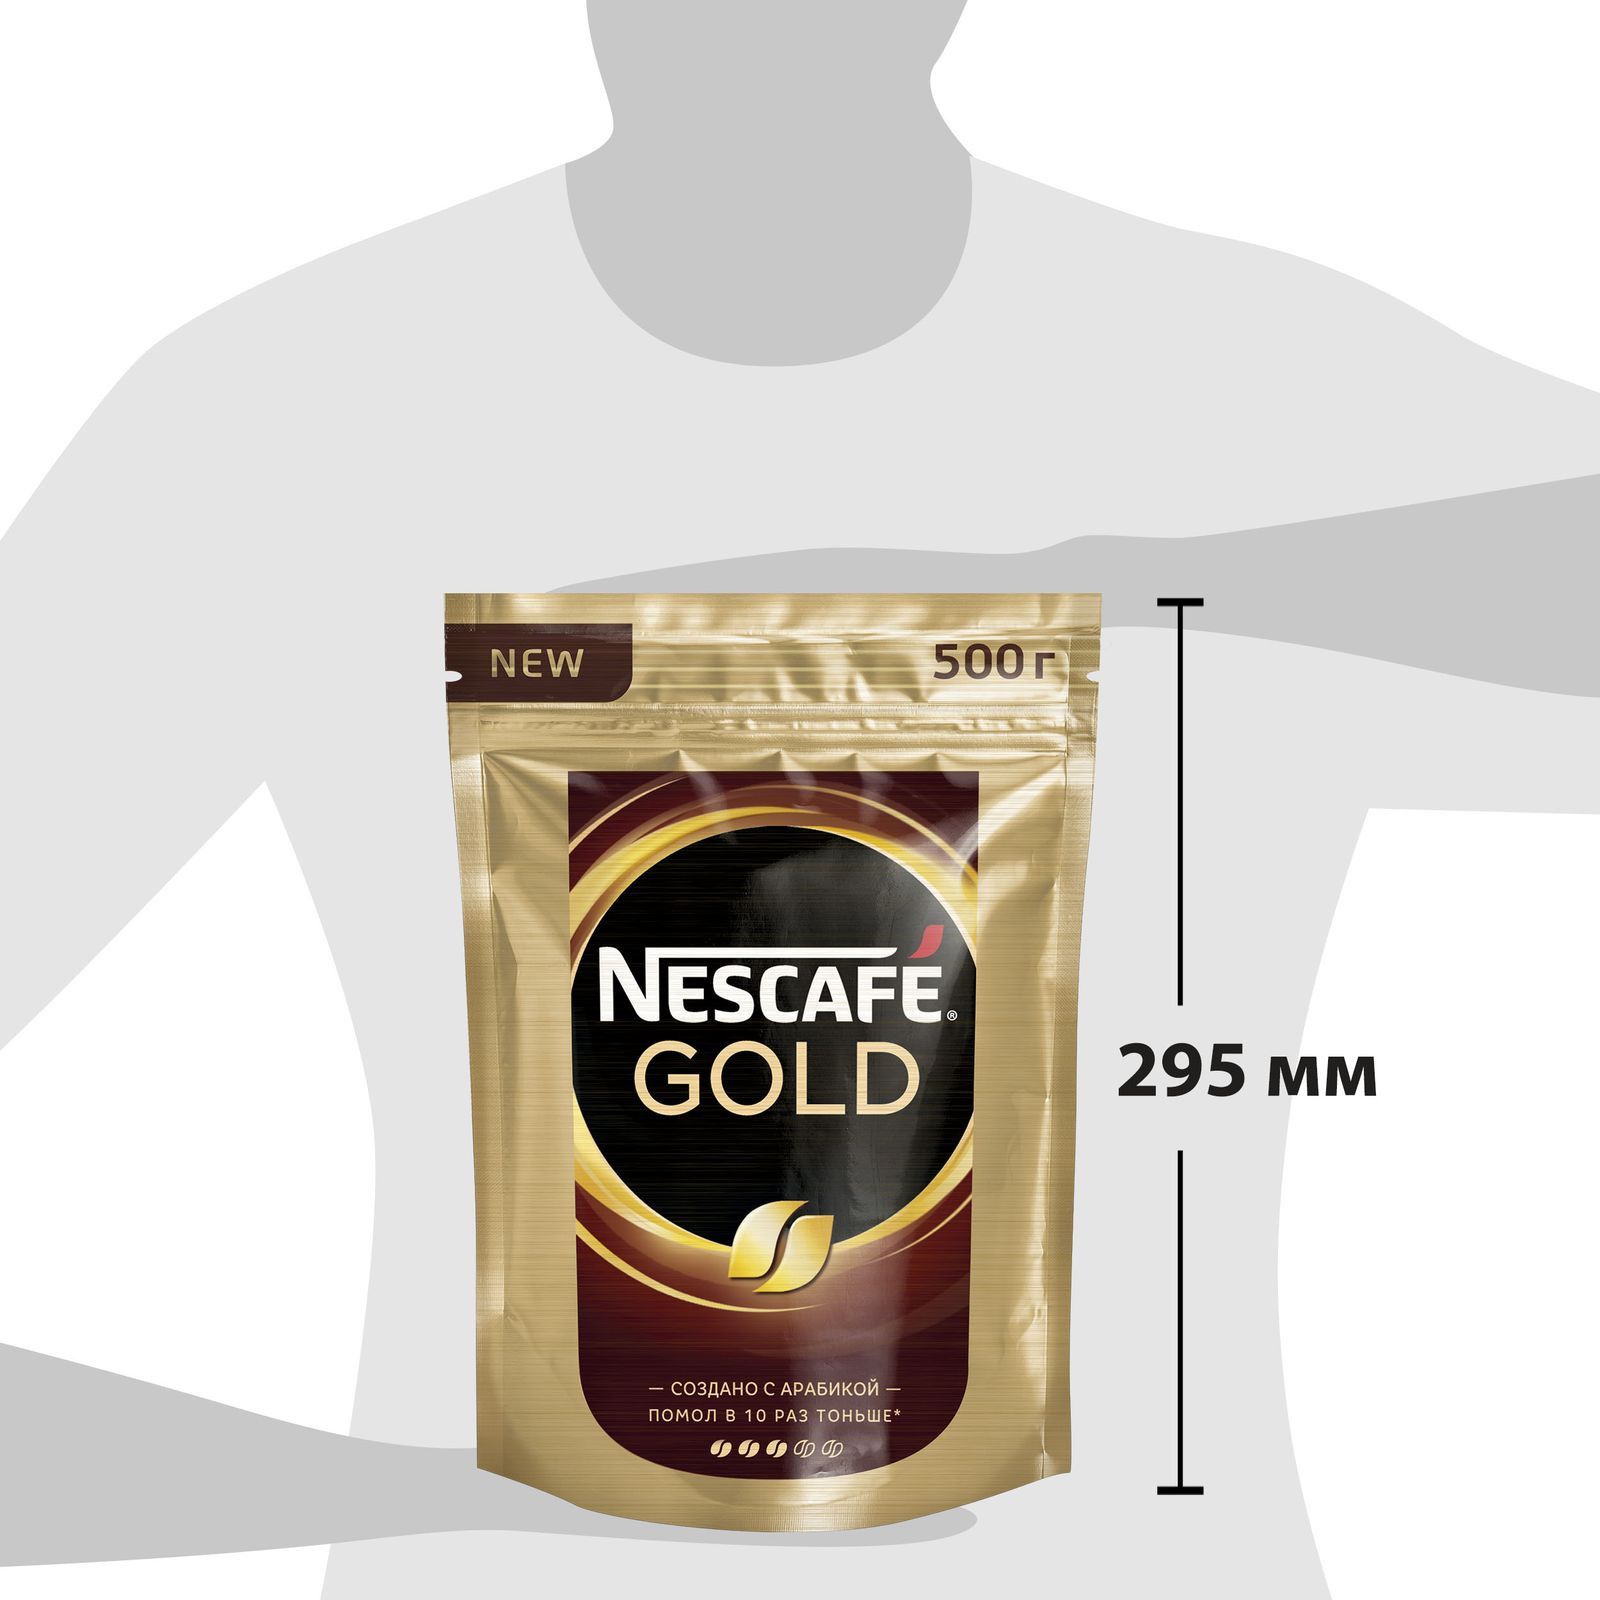   Nescafe Gold, 500 